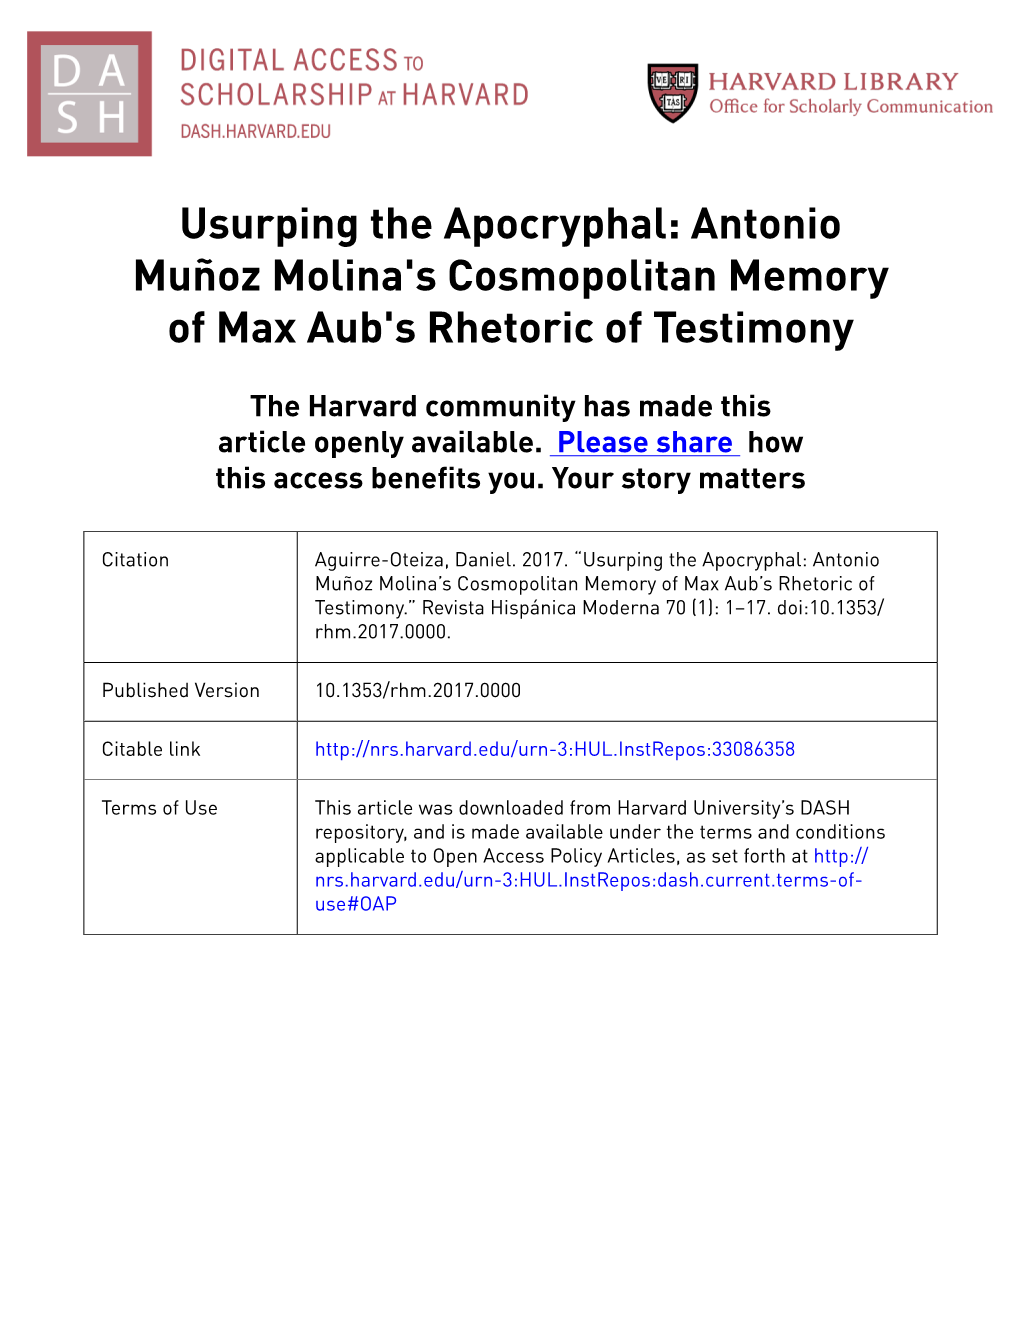 Antonio Muñoz Molina's Cosmopolitan Memory of Max Aub's Rhetoric of Testimony